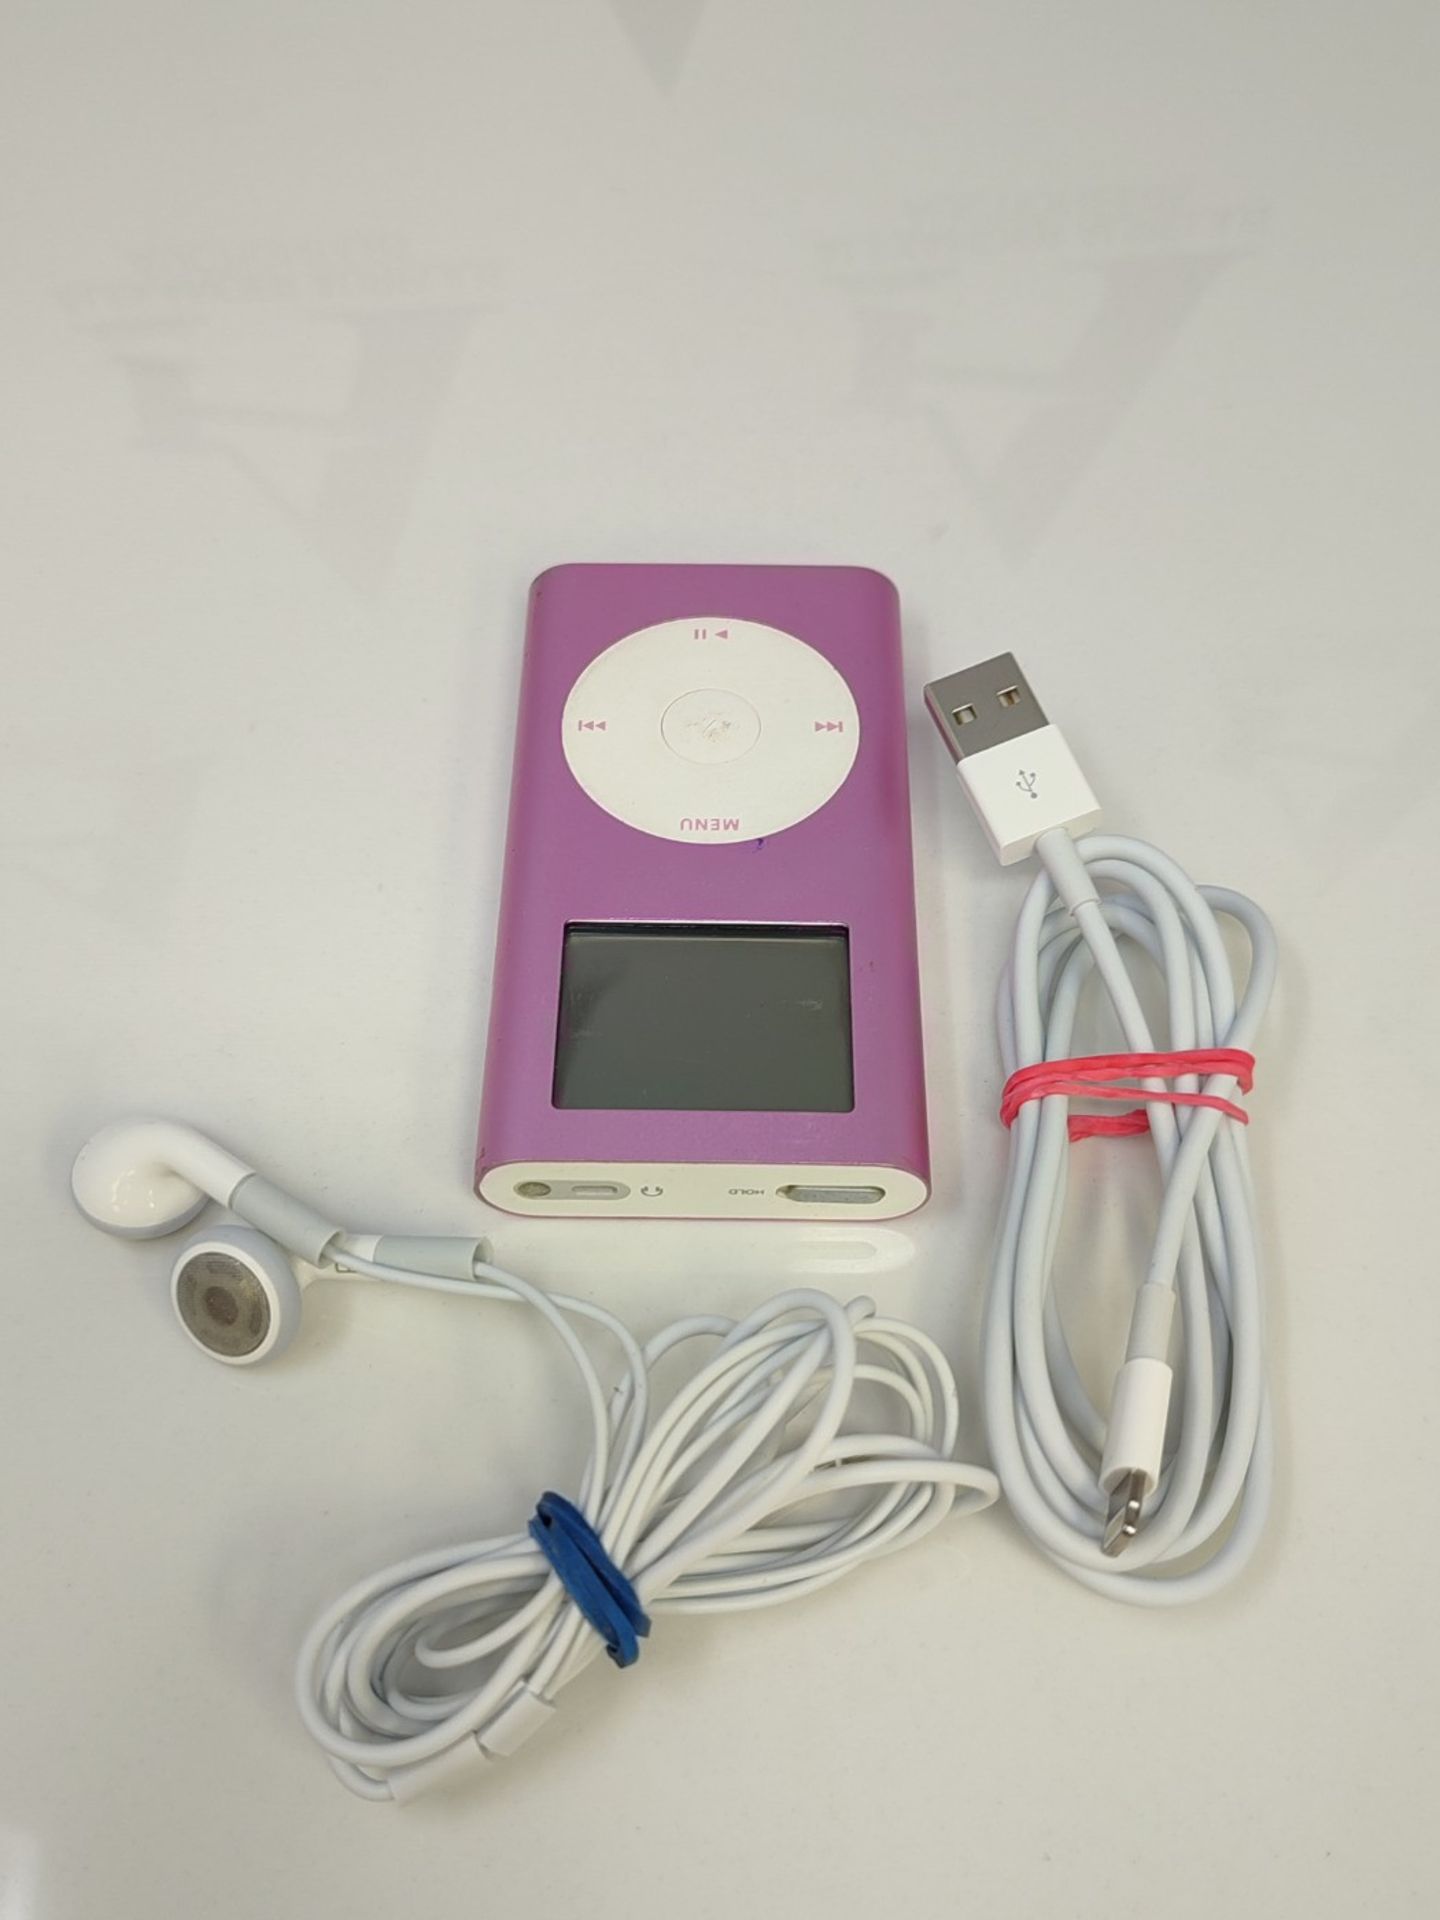 Apple iPod mini 6GB - pink - Image 2 of 2